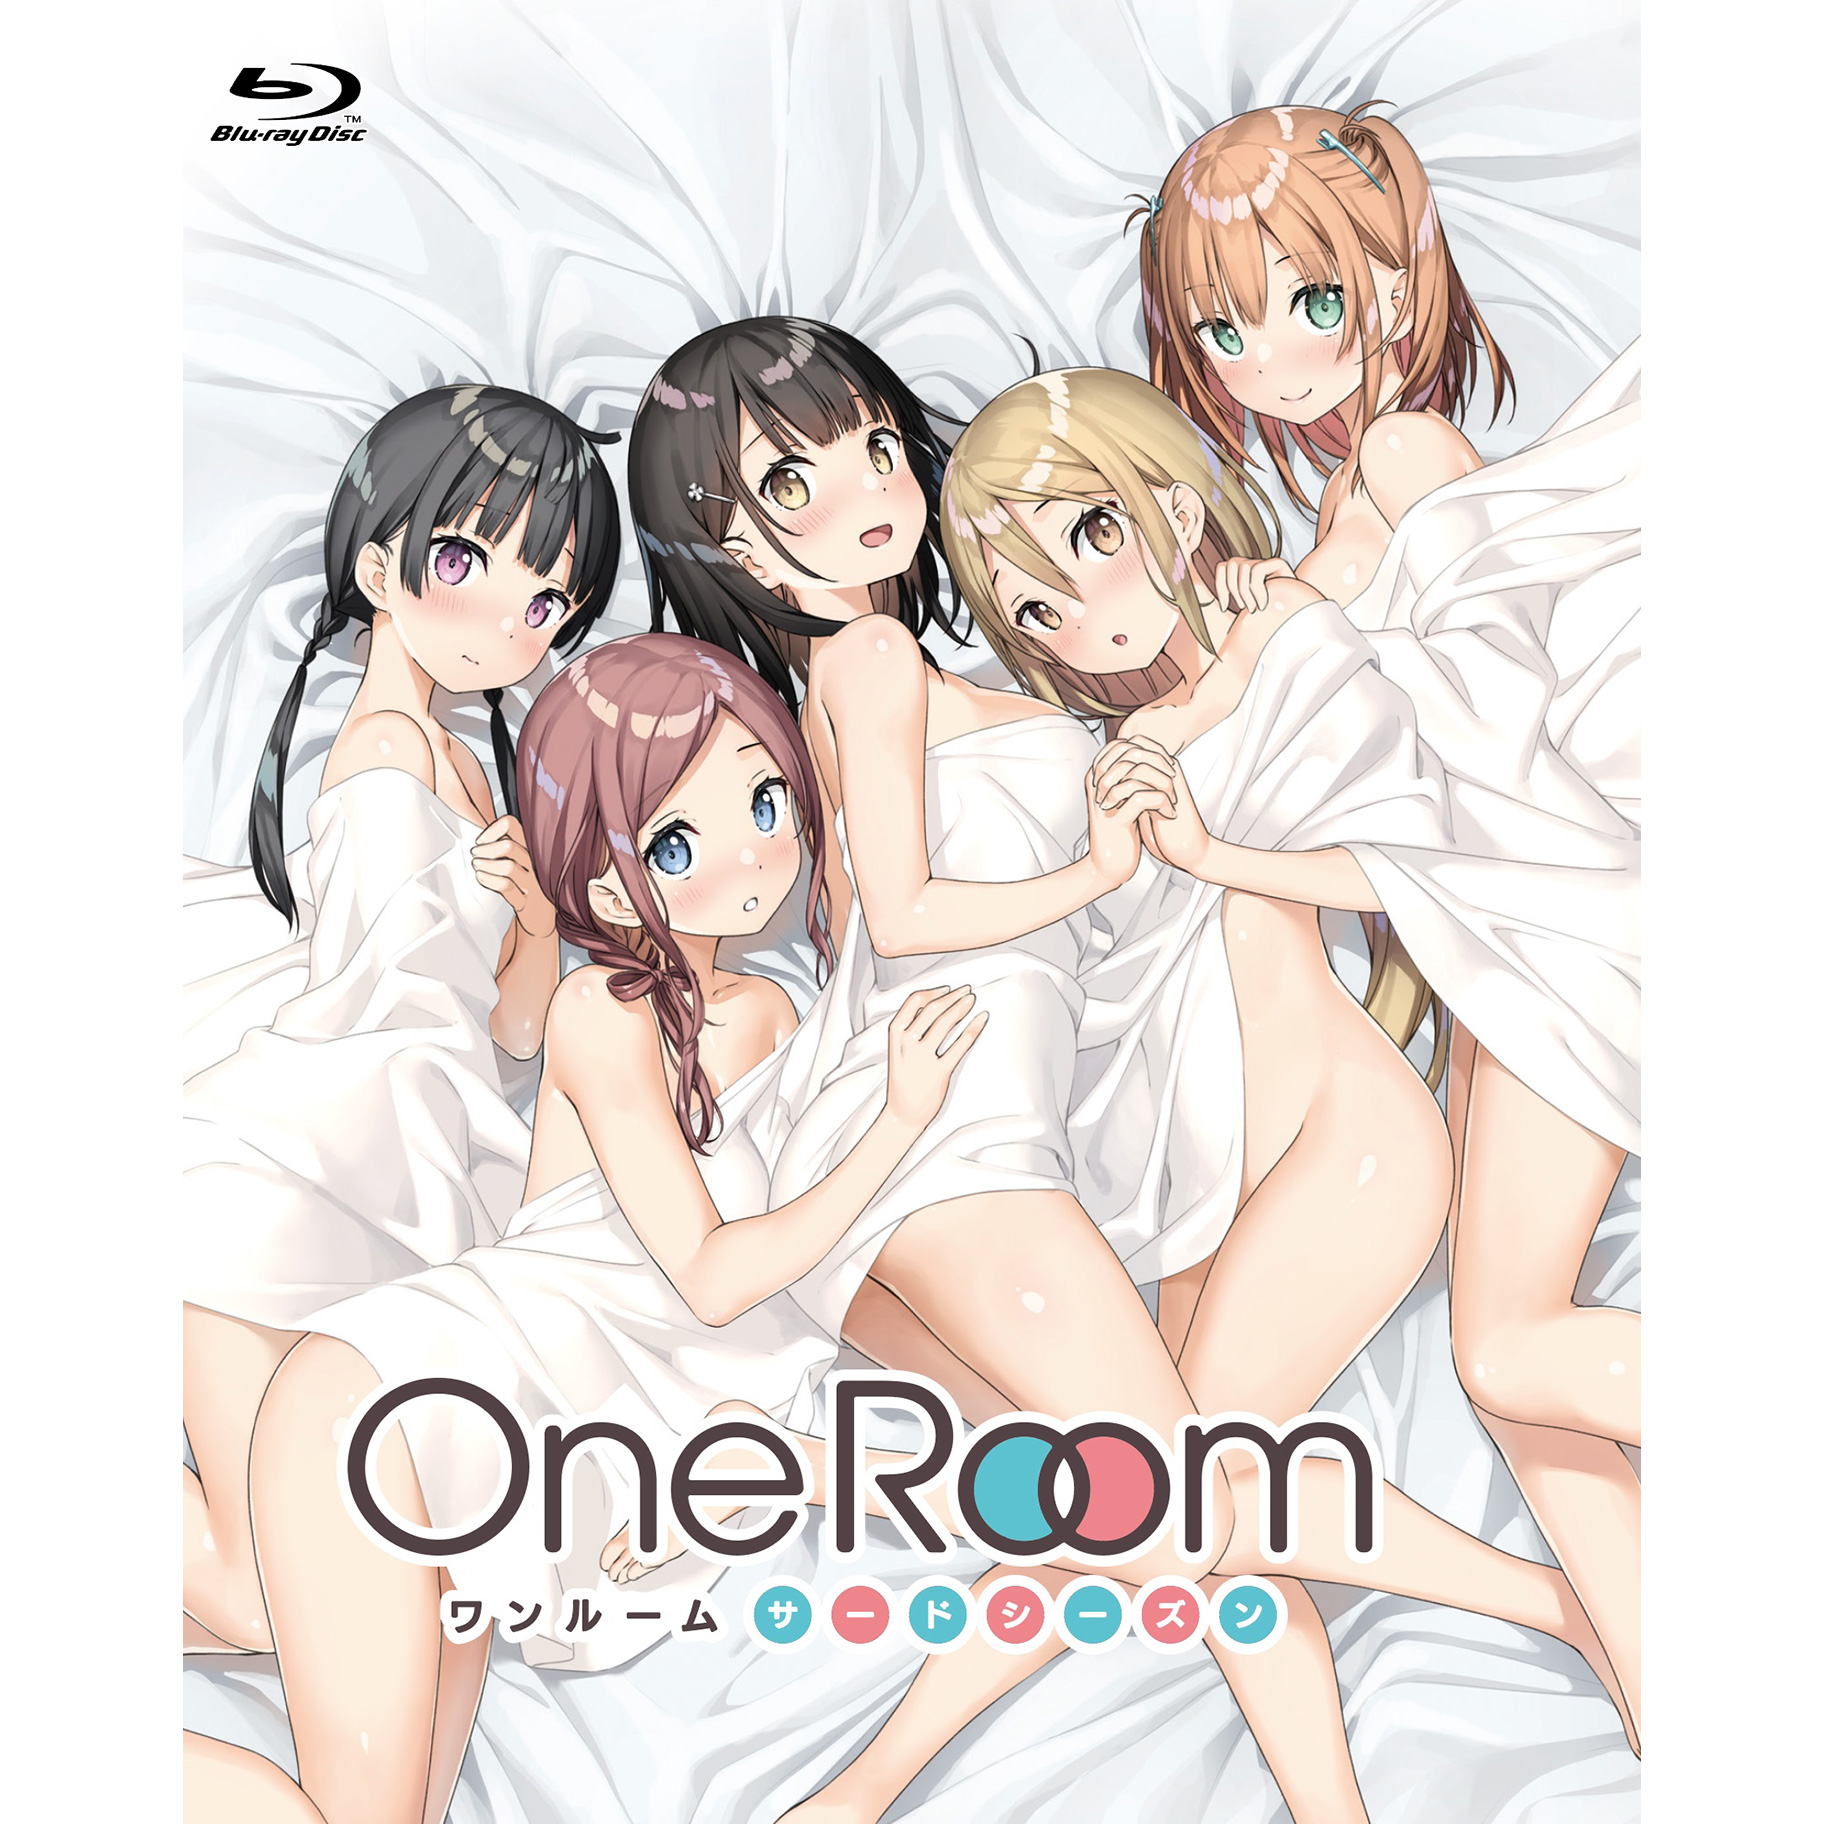 「One Roomサードシーズン」 Blu-ray